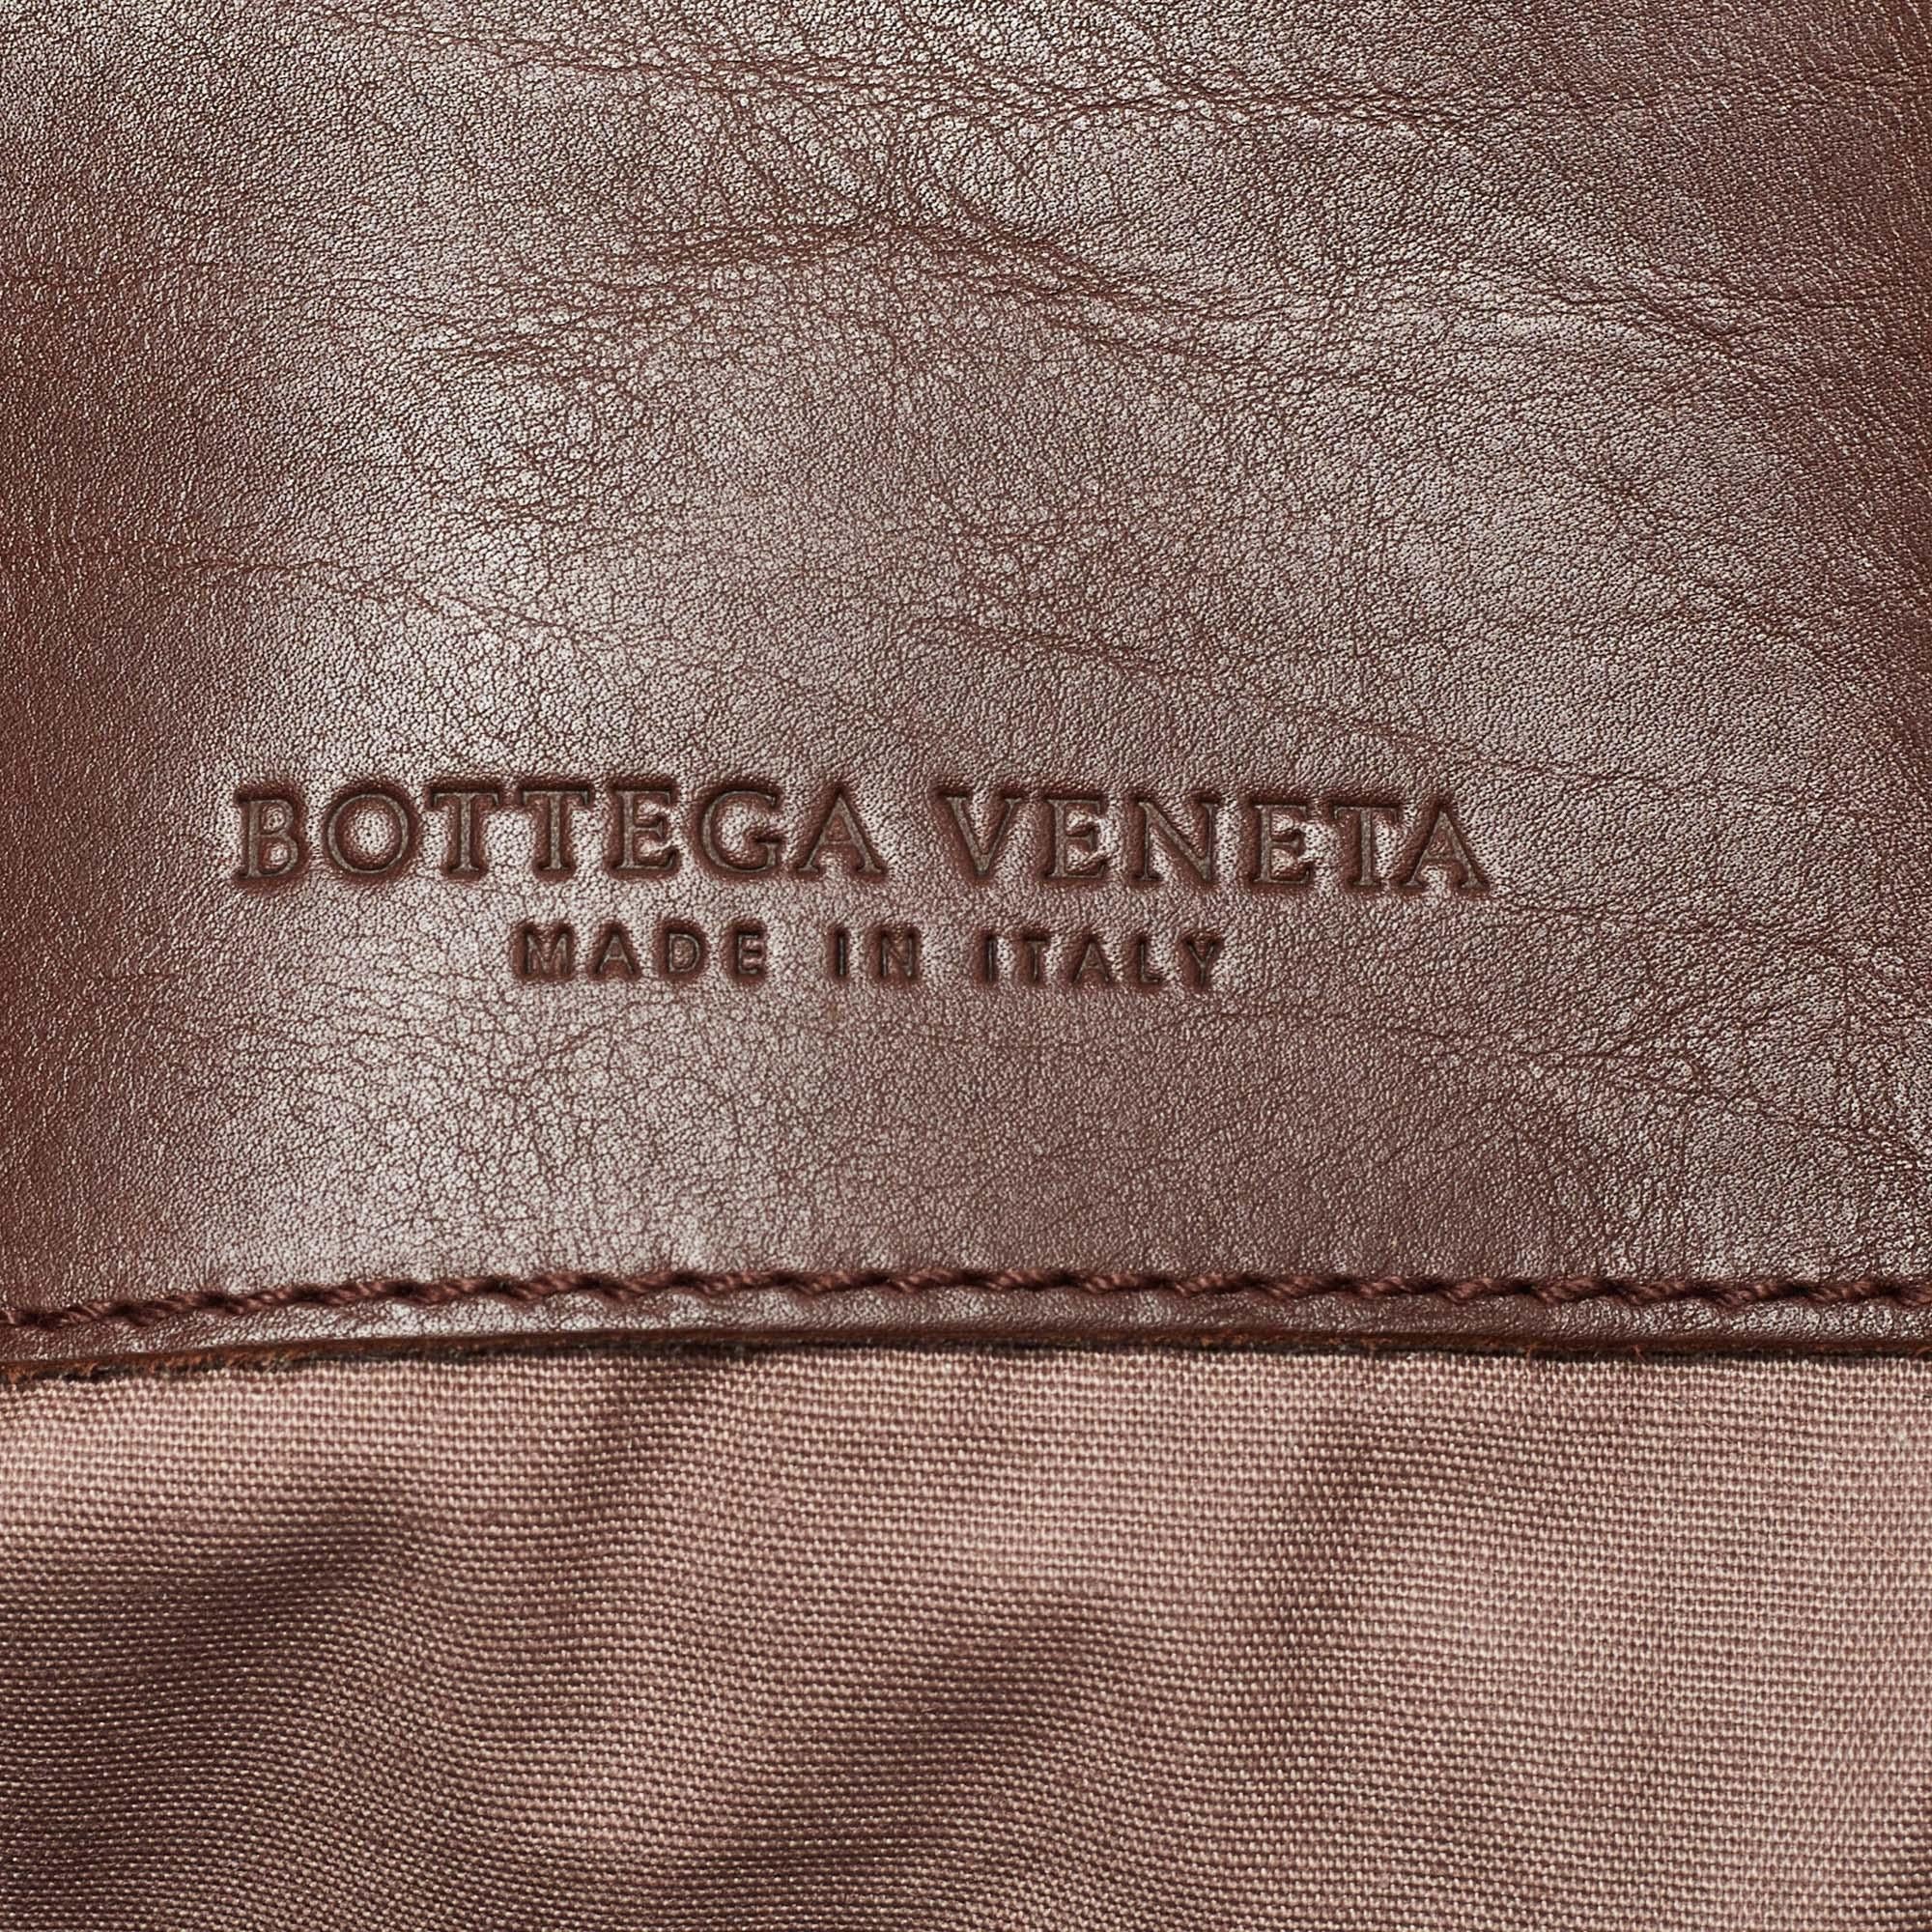 Bottega Veneta Brown/Black Intrecciato Leather Tote 4